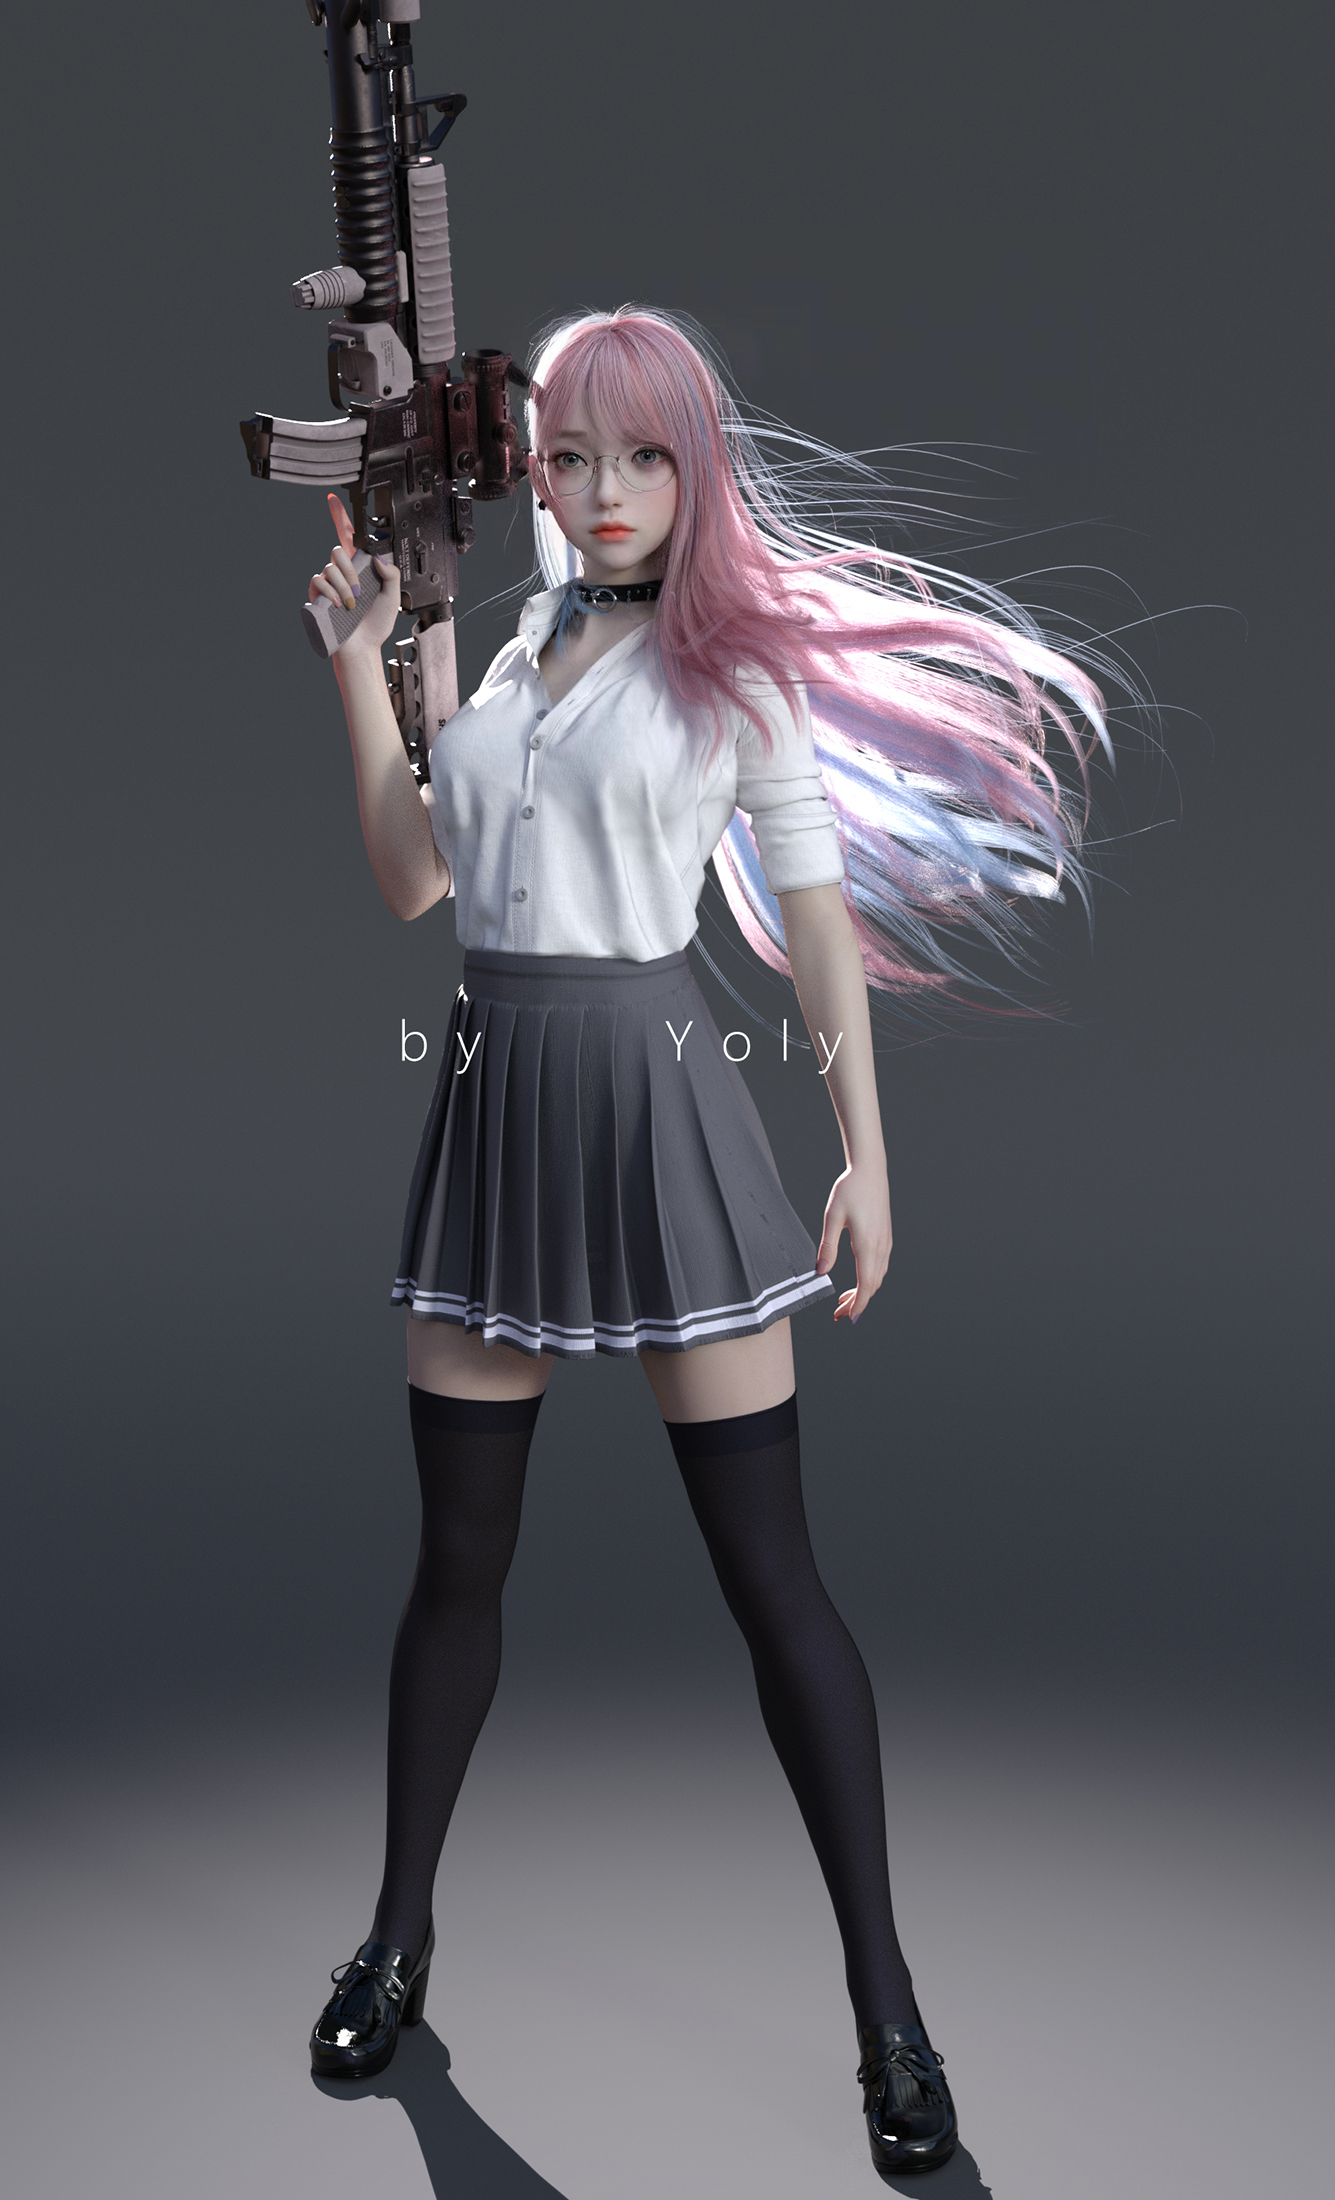 General 1335x2200 CGI digital art fantasy girl schoolgirl school uniform women women indoors Yoly gun girls with guns